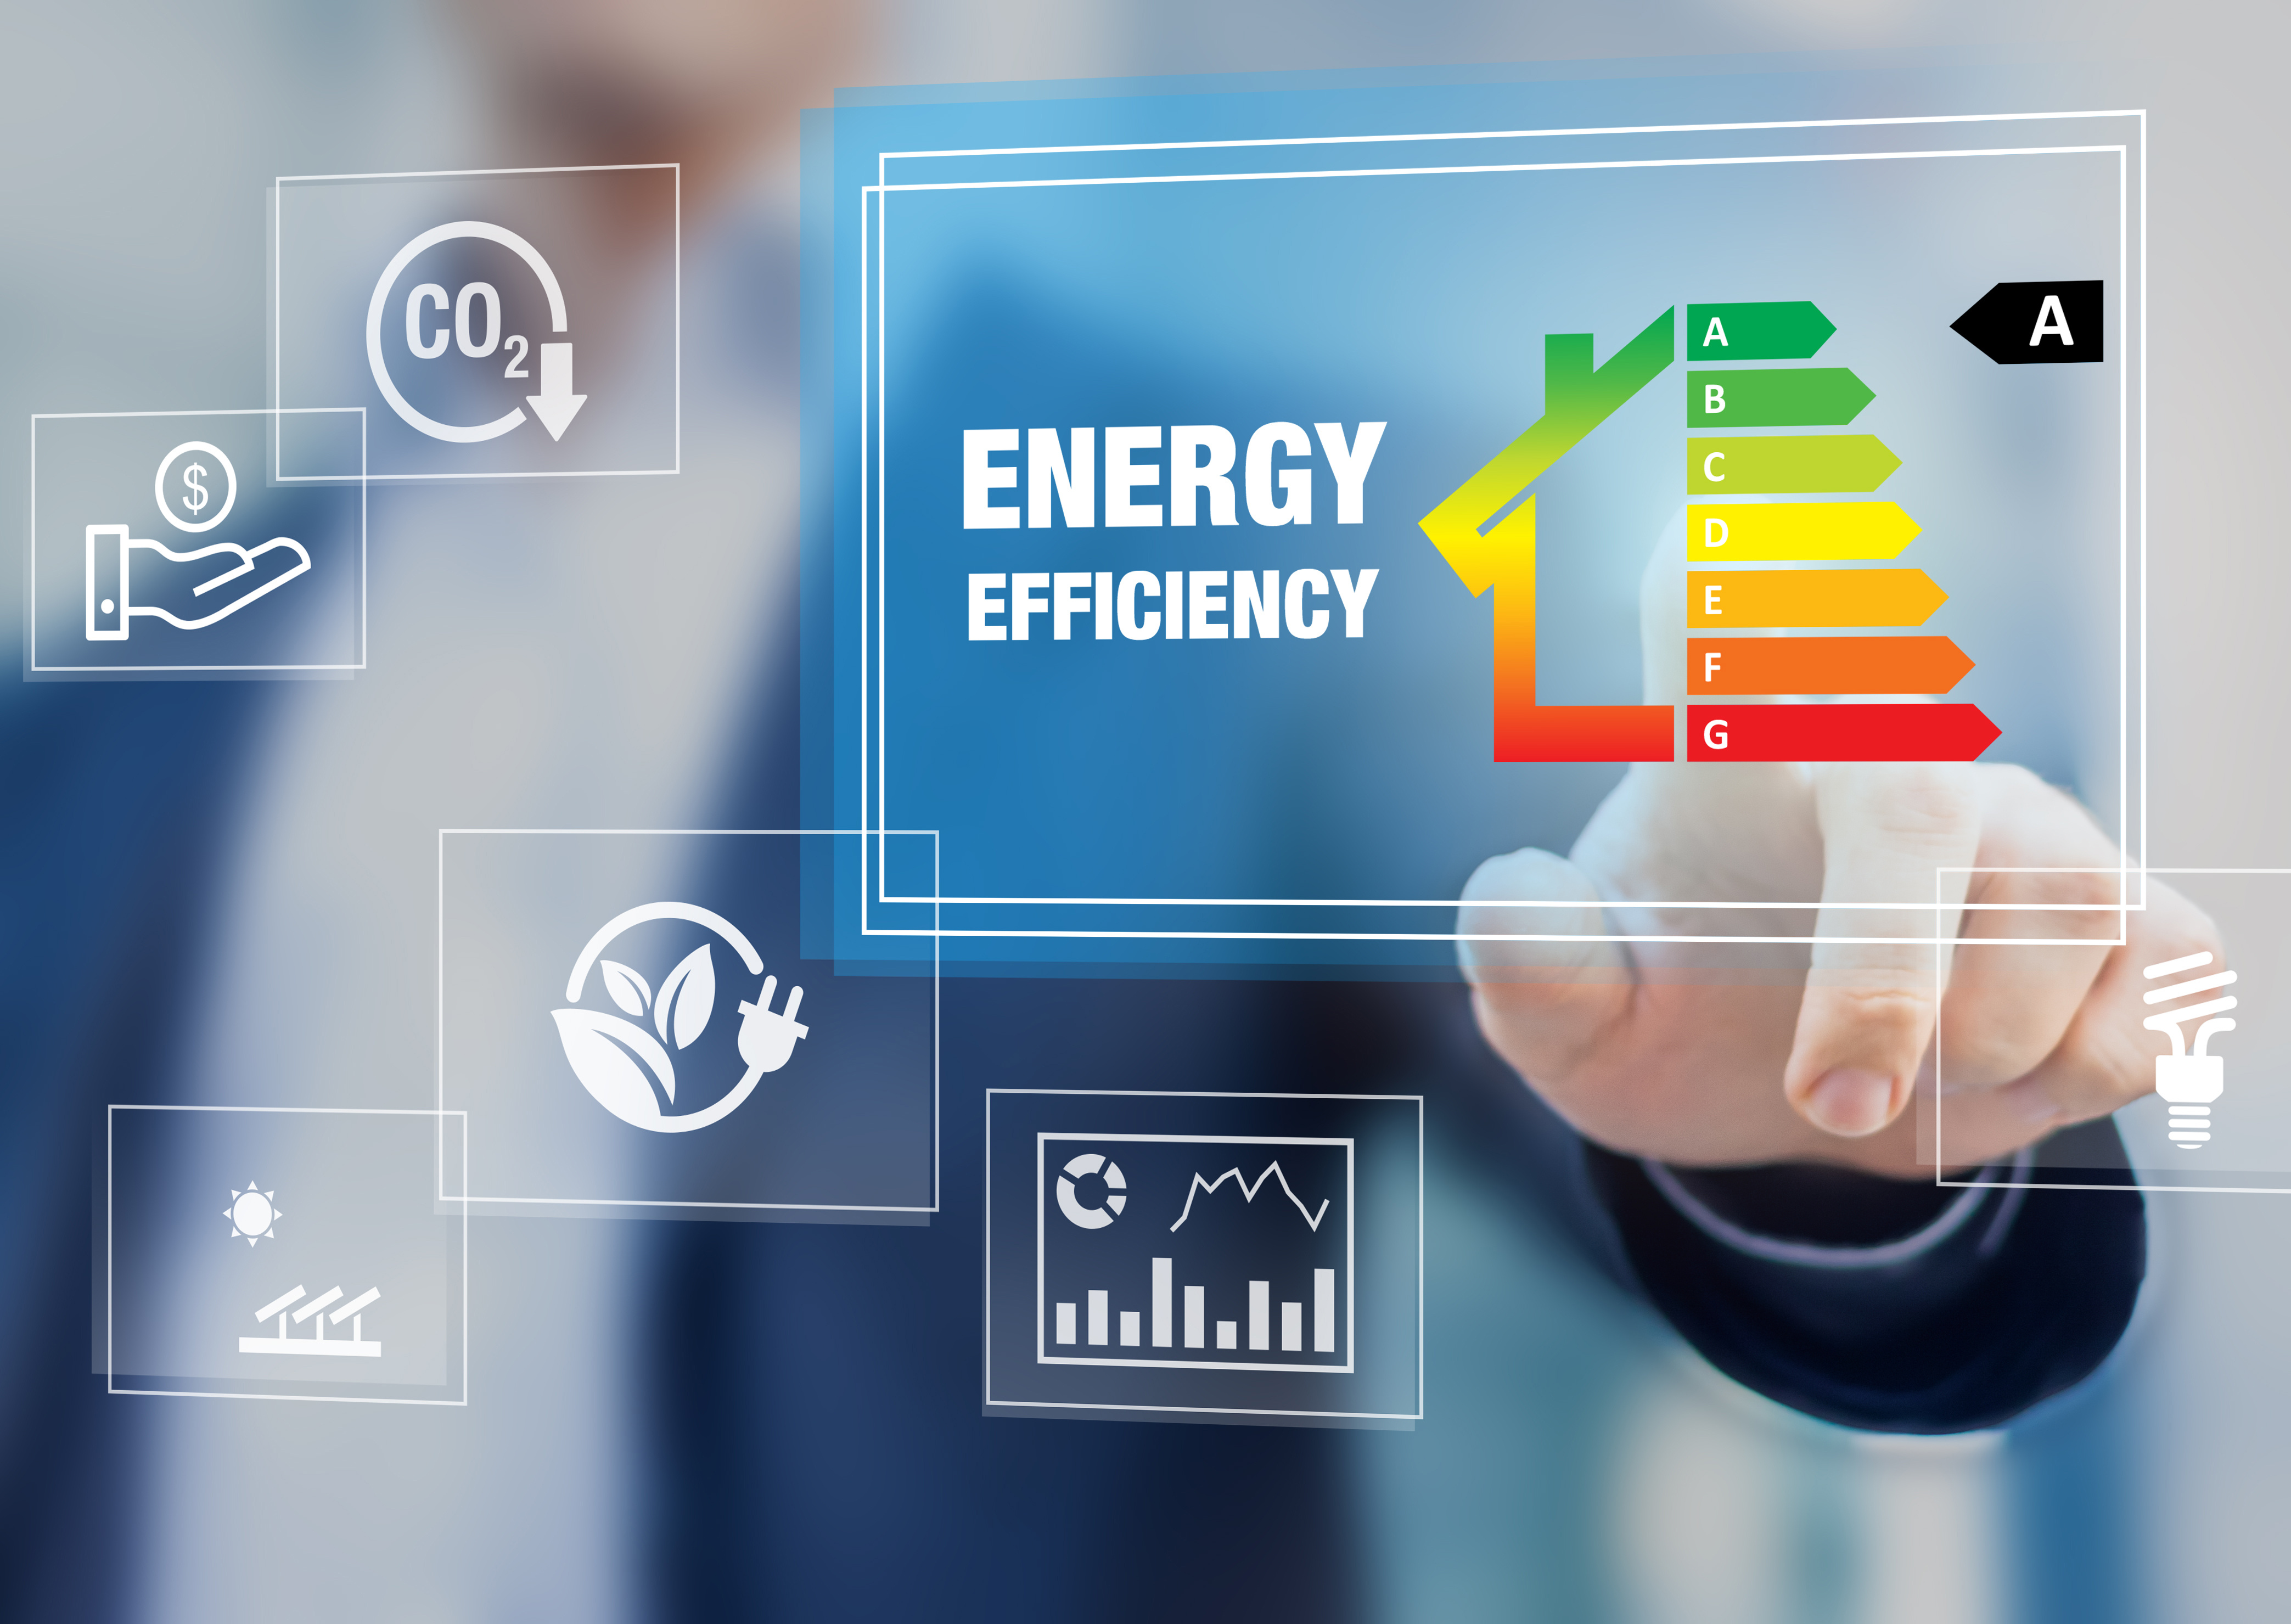 Building Performance Standards or BPS Energy Efficiency